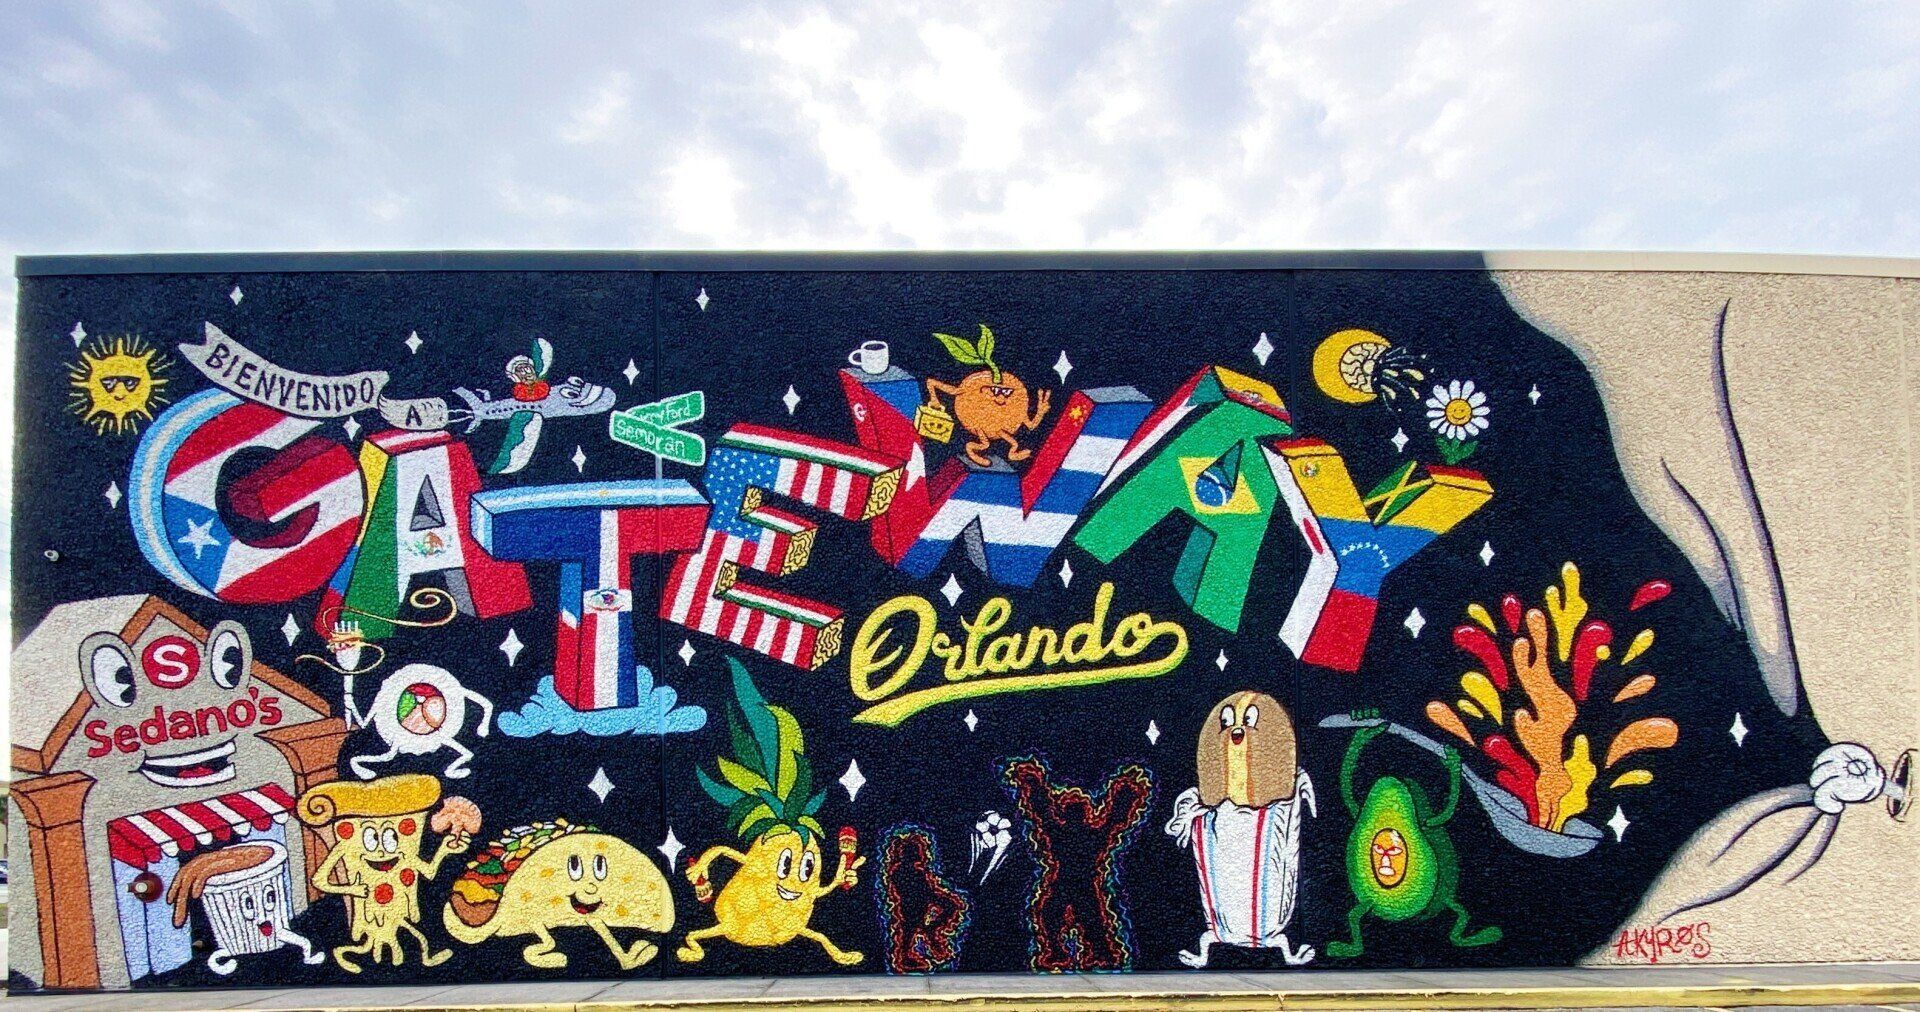 Gateway Orlando District Mural titled Diverse Pallet at Sedanos on Semoran Blvd.